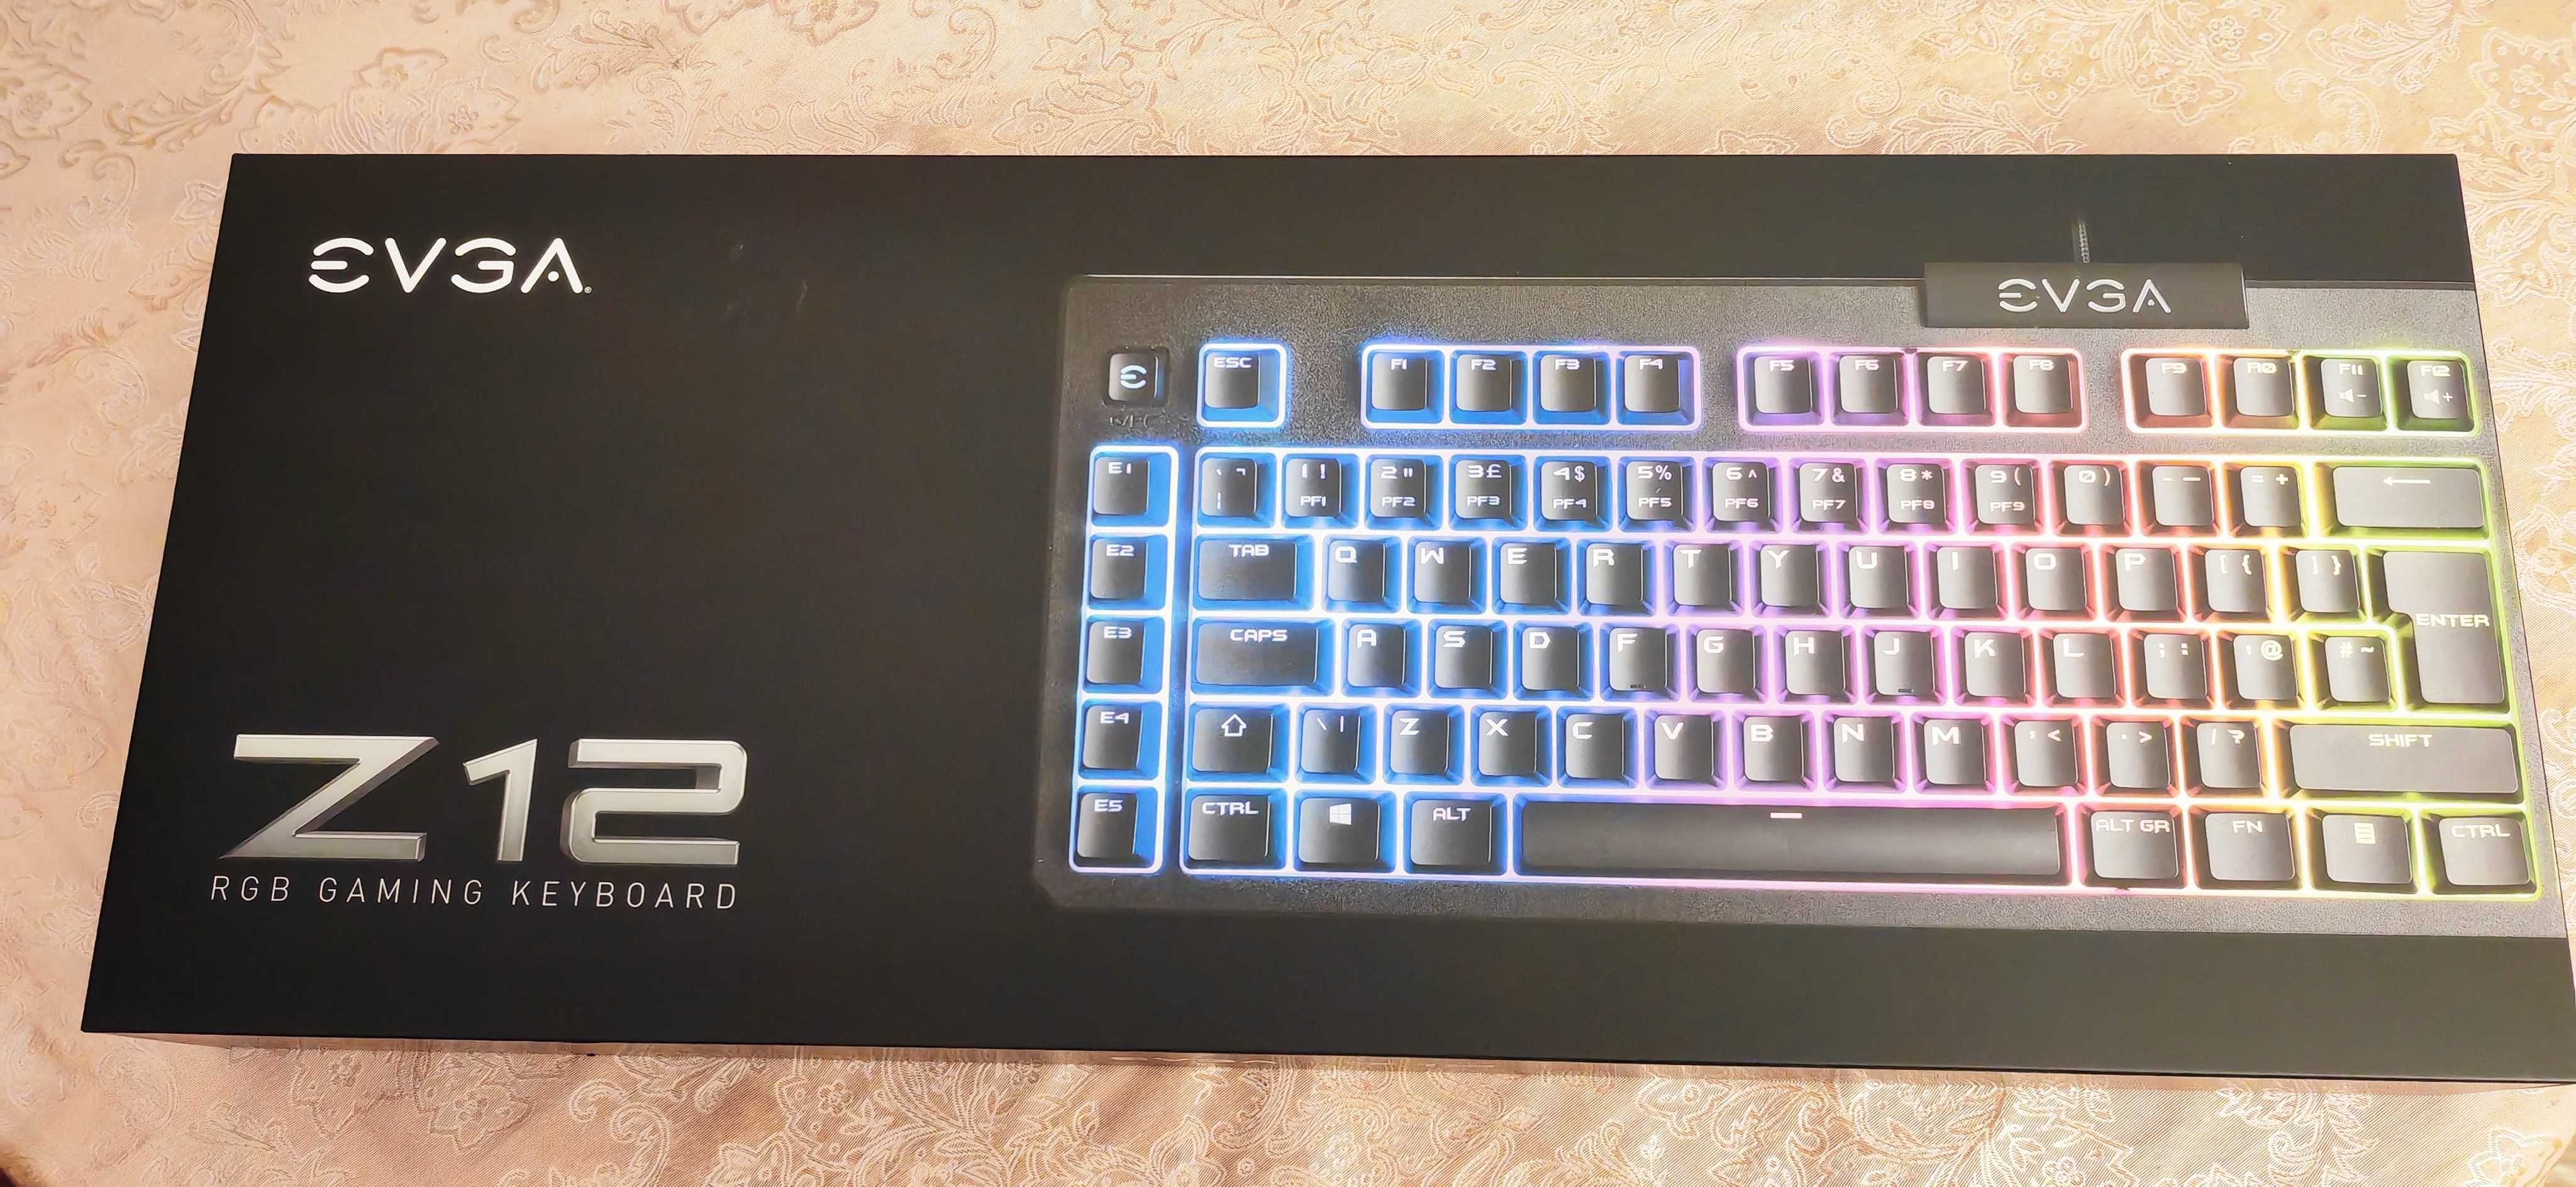 EVGA Z12 RGB черен геймърска клавиатура USB чисто нова 3 год. гаранция